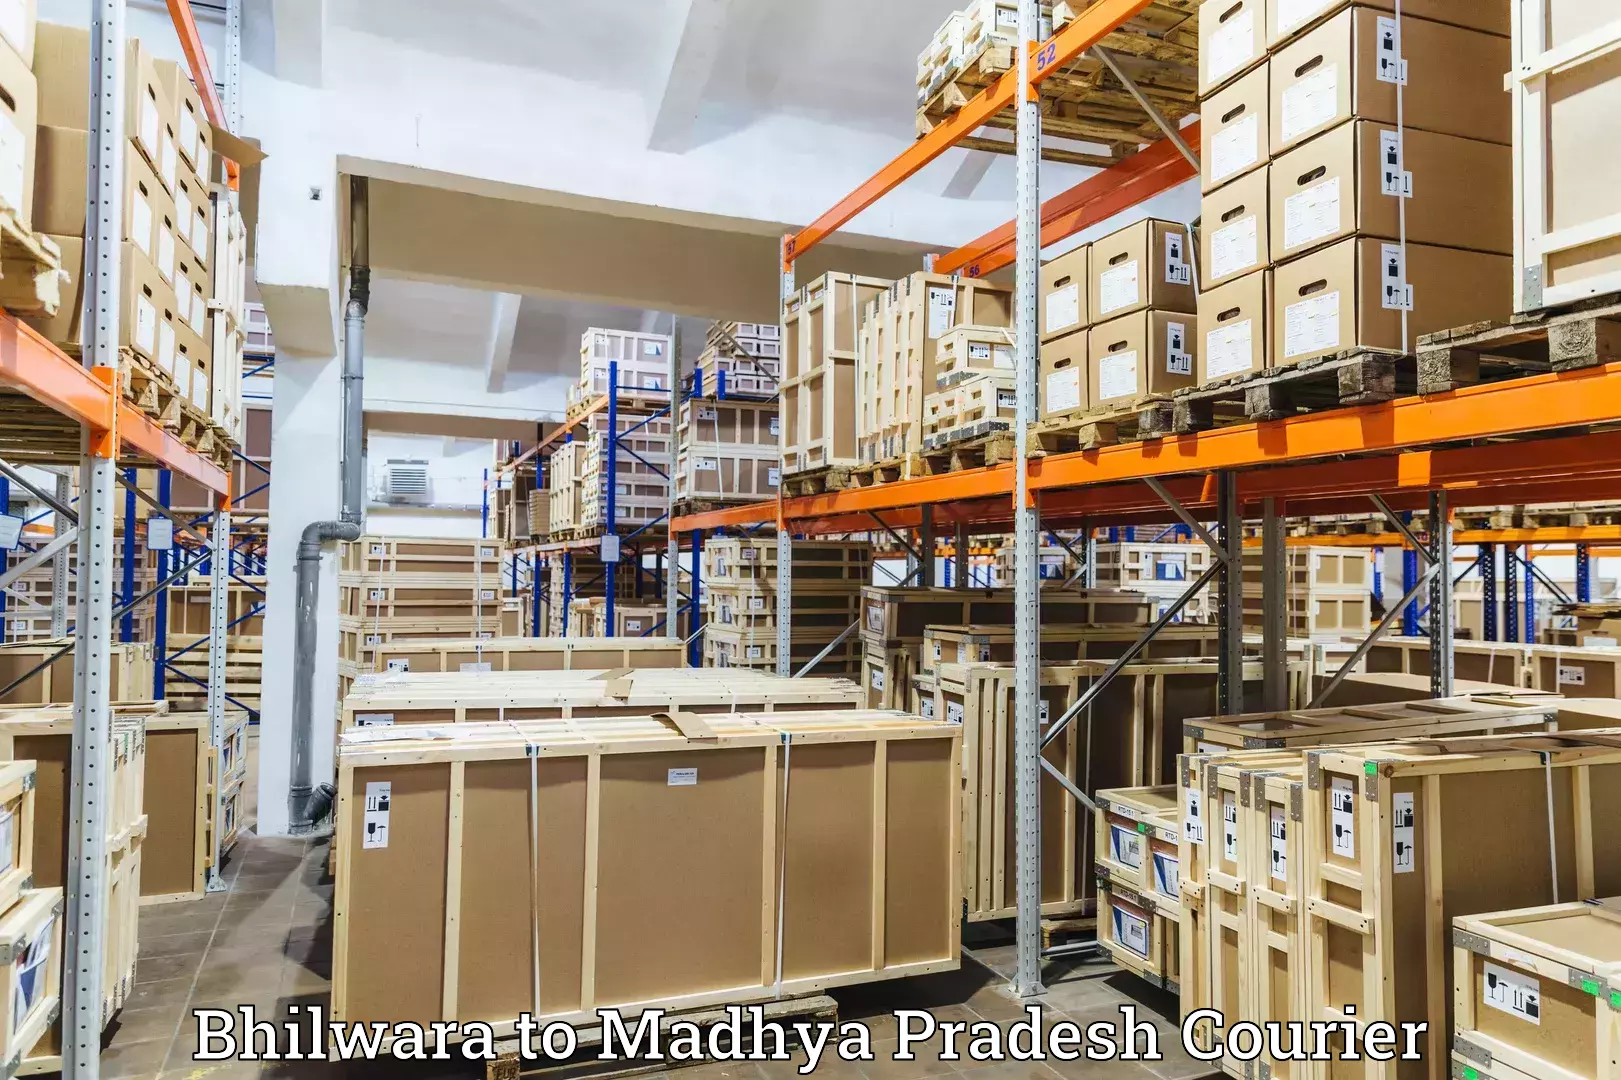 Express delivery capabilities Bhilwara to Madhya Pradesh